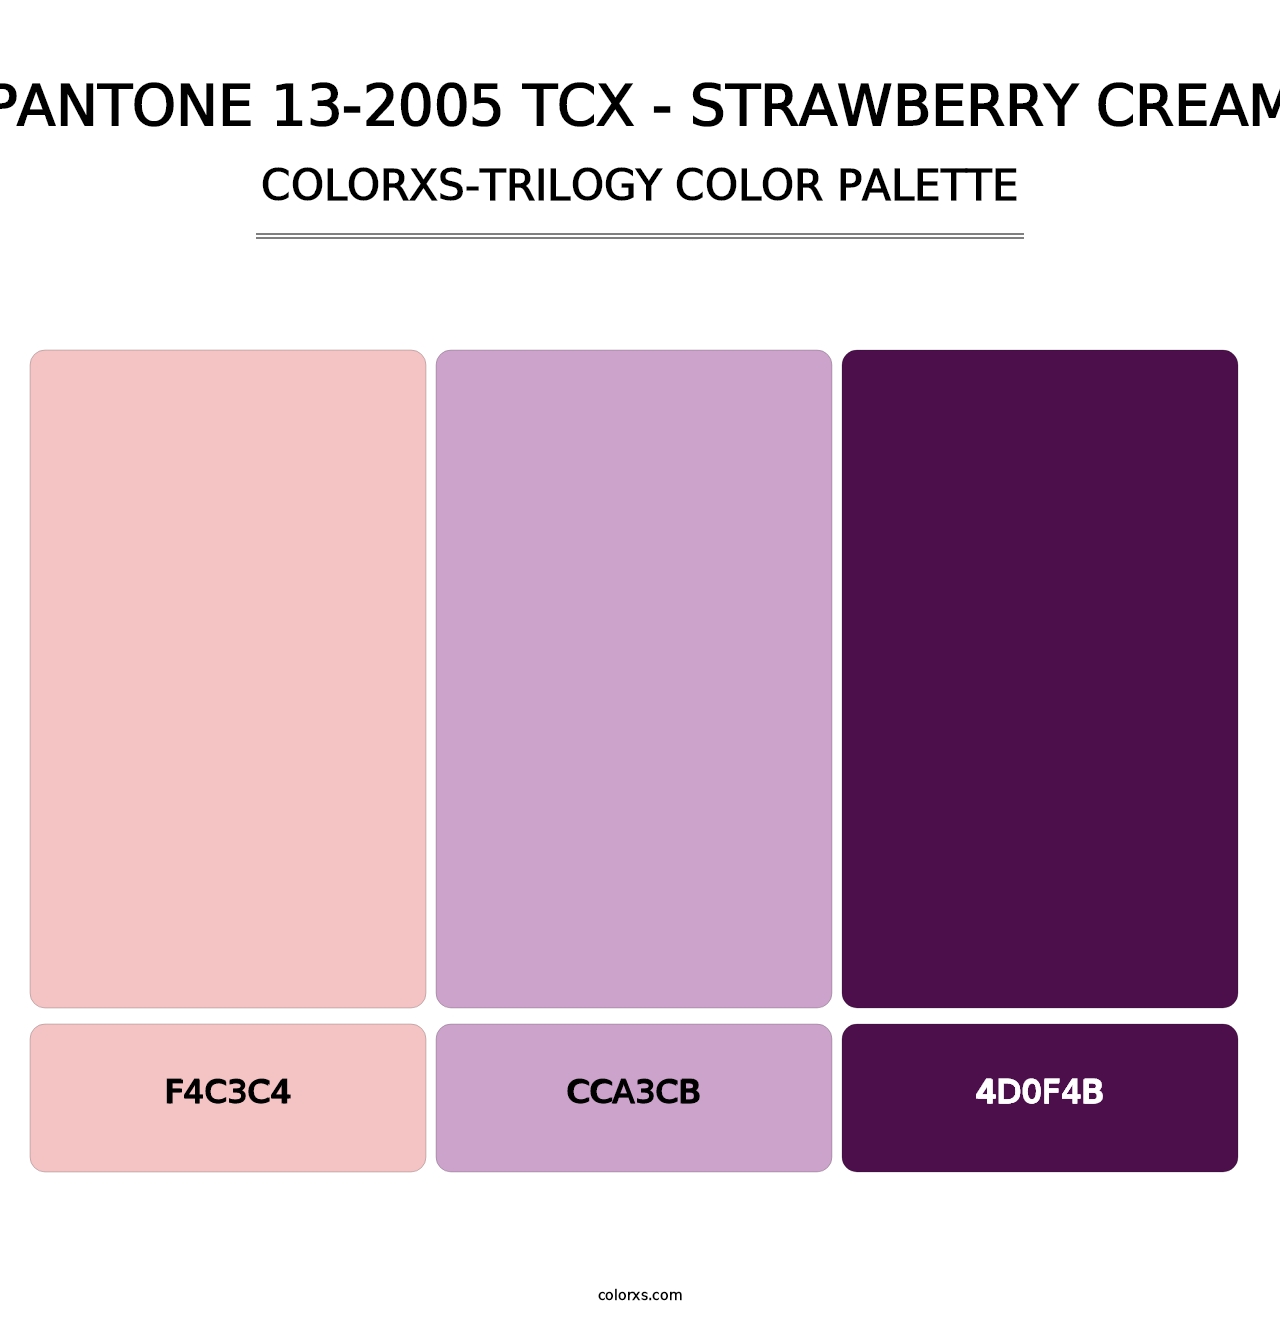 PANTONE 13-2005 TCX - Strawberry Cream - Colorxs Trilogy Palette